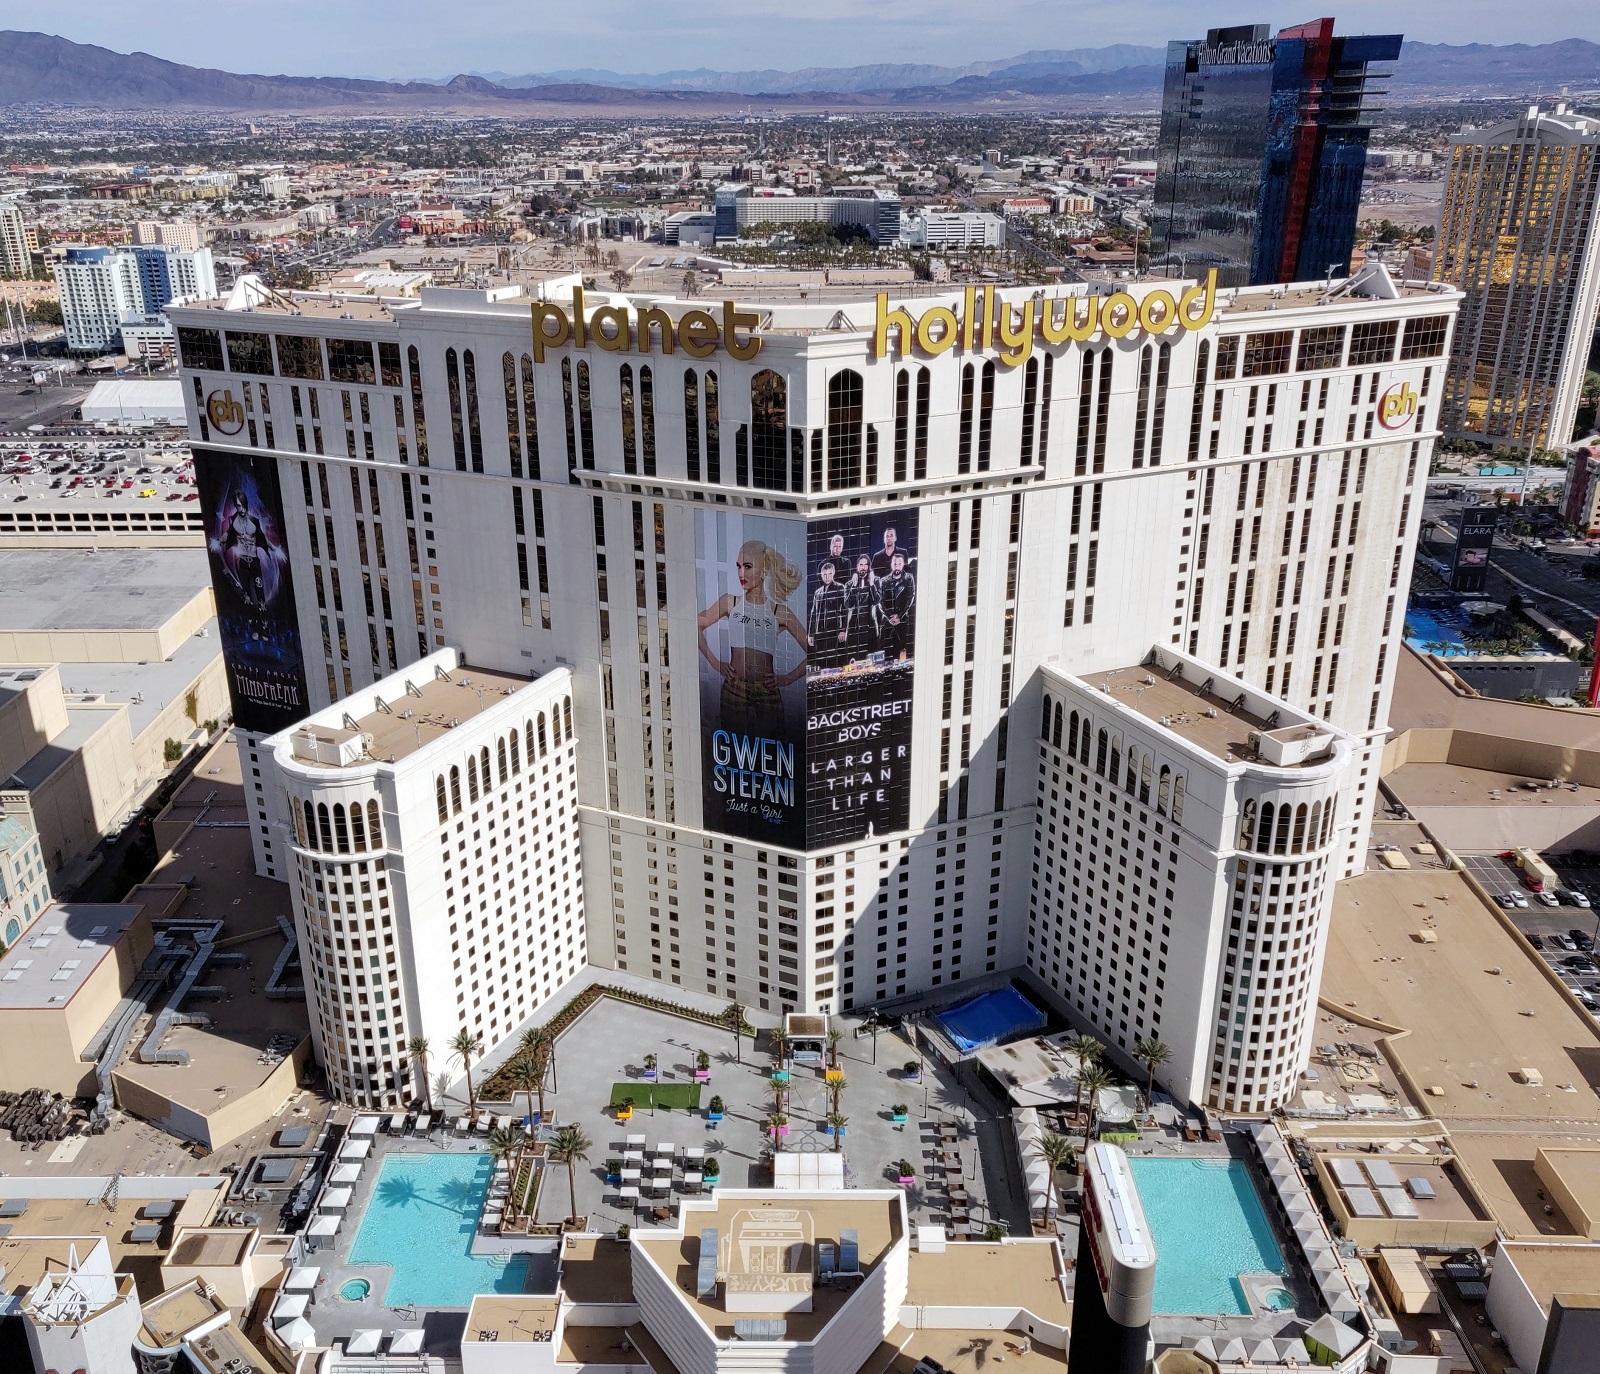 Planet Hollywood Las Vegas Hotel Review & Tour